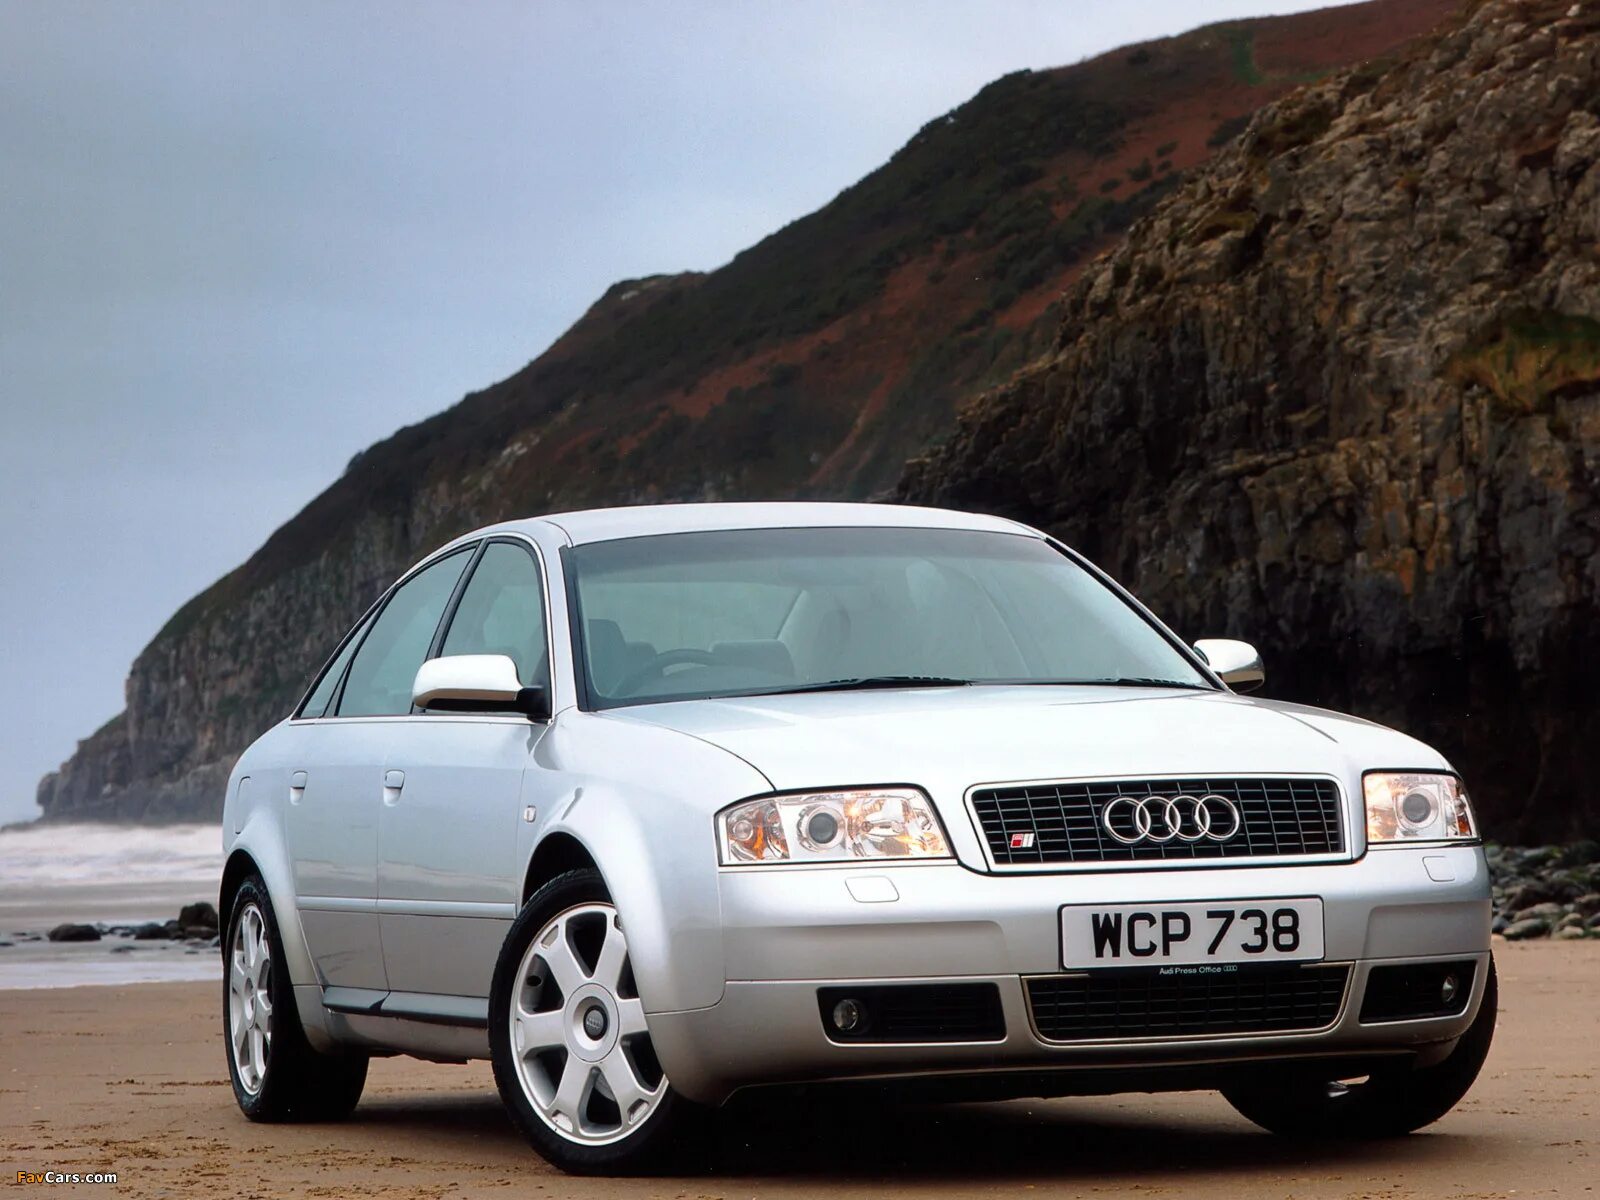 Купить ауди 1999. Audi s6 c5. Audi a6 c5 1999. Ауди s6 1999. Ауди а6 кватро 1999.